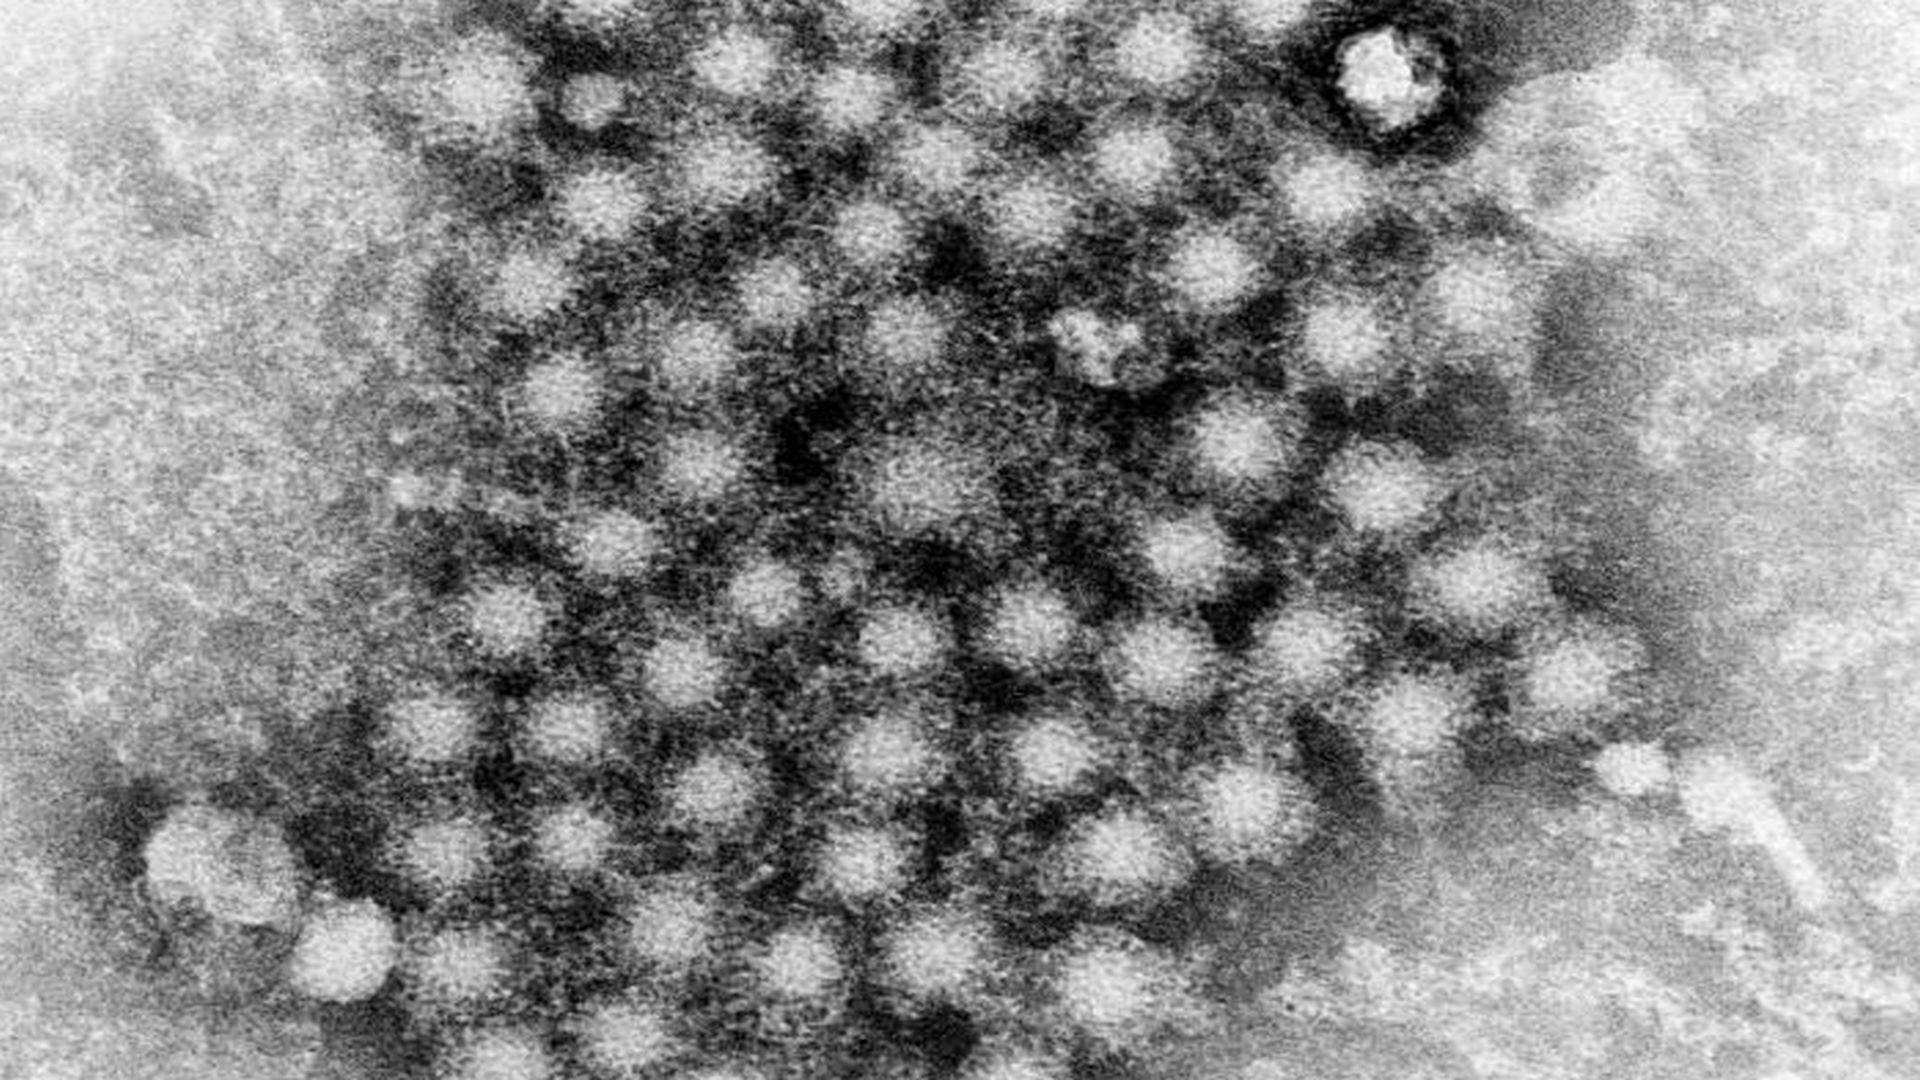 Researchers Identify How Class of Drugs Blocks Hepatitis C Virus Replication